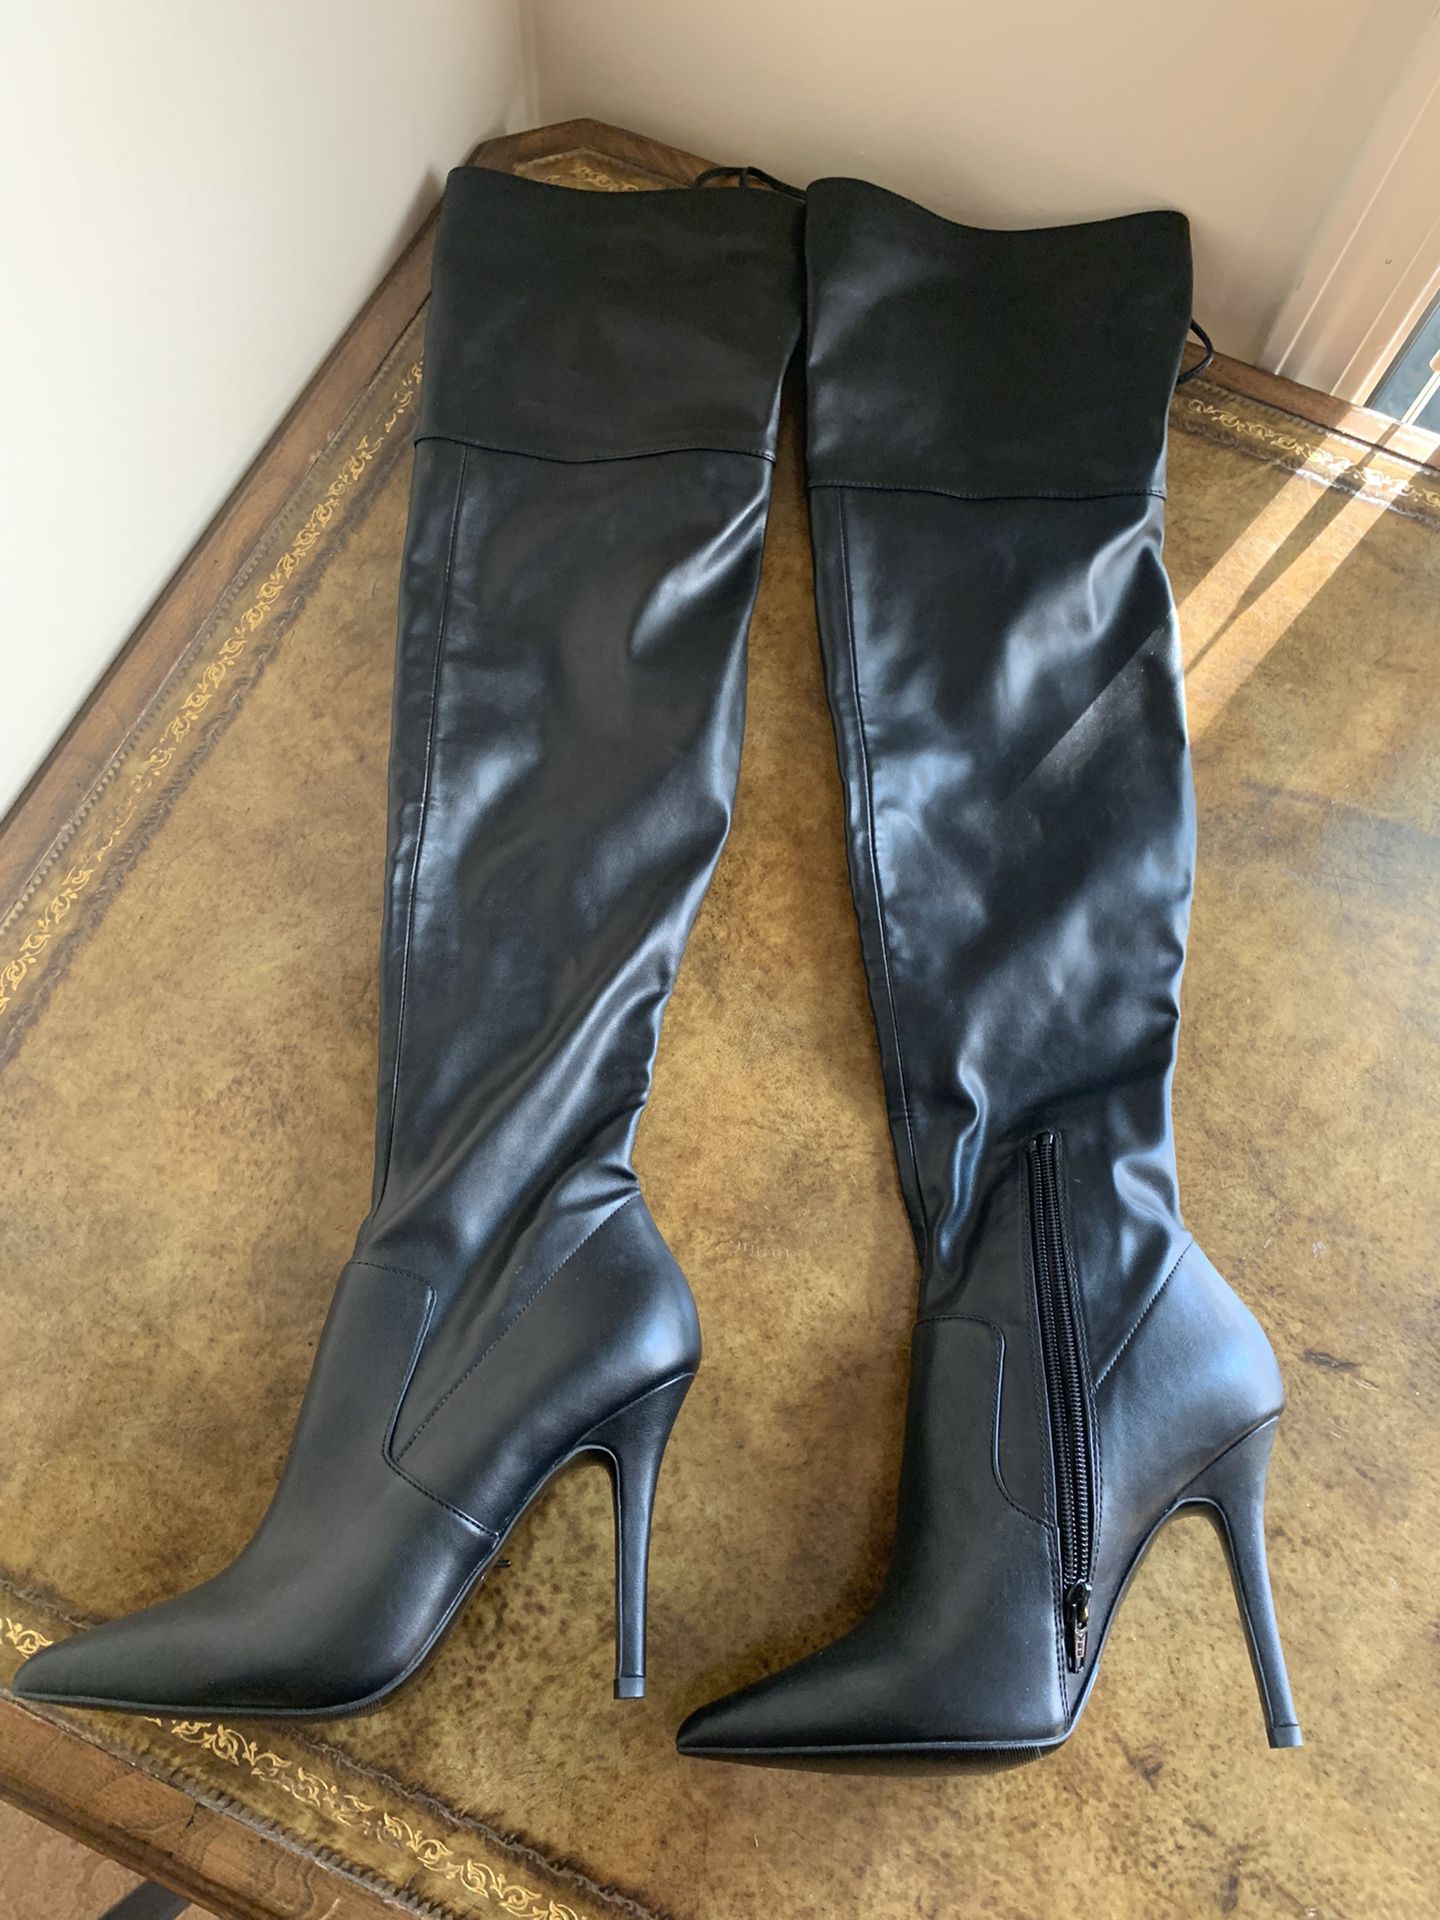 New ALDO High heels above knee black boots, size 7.5